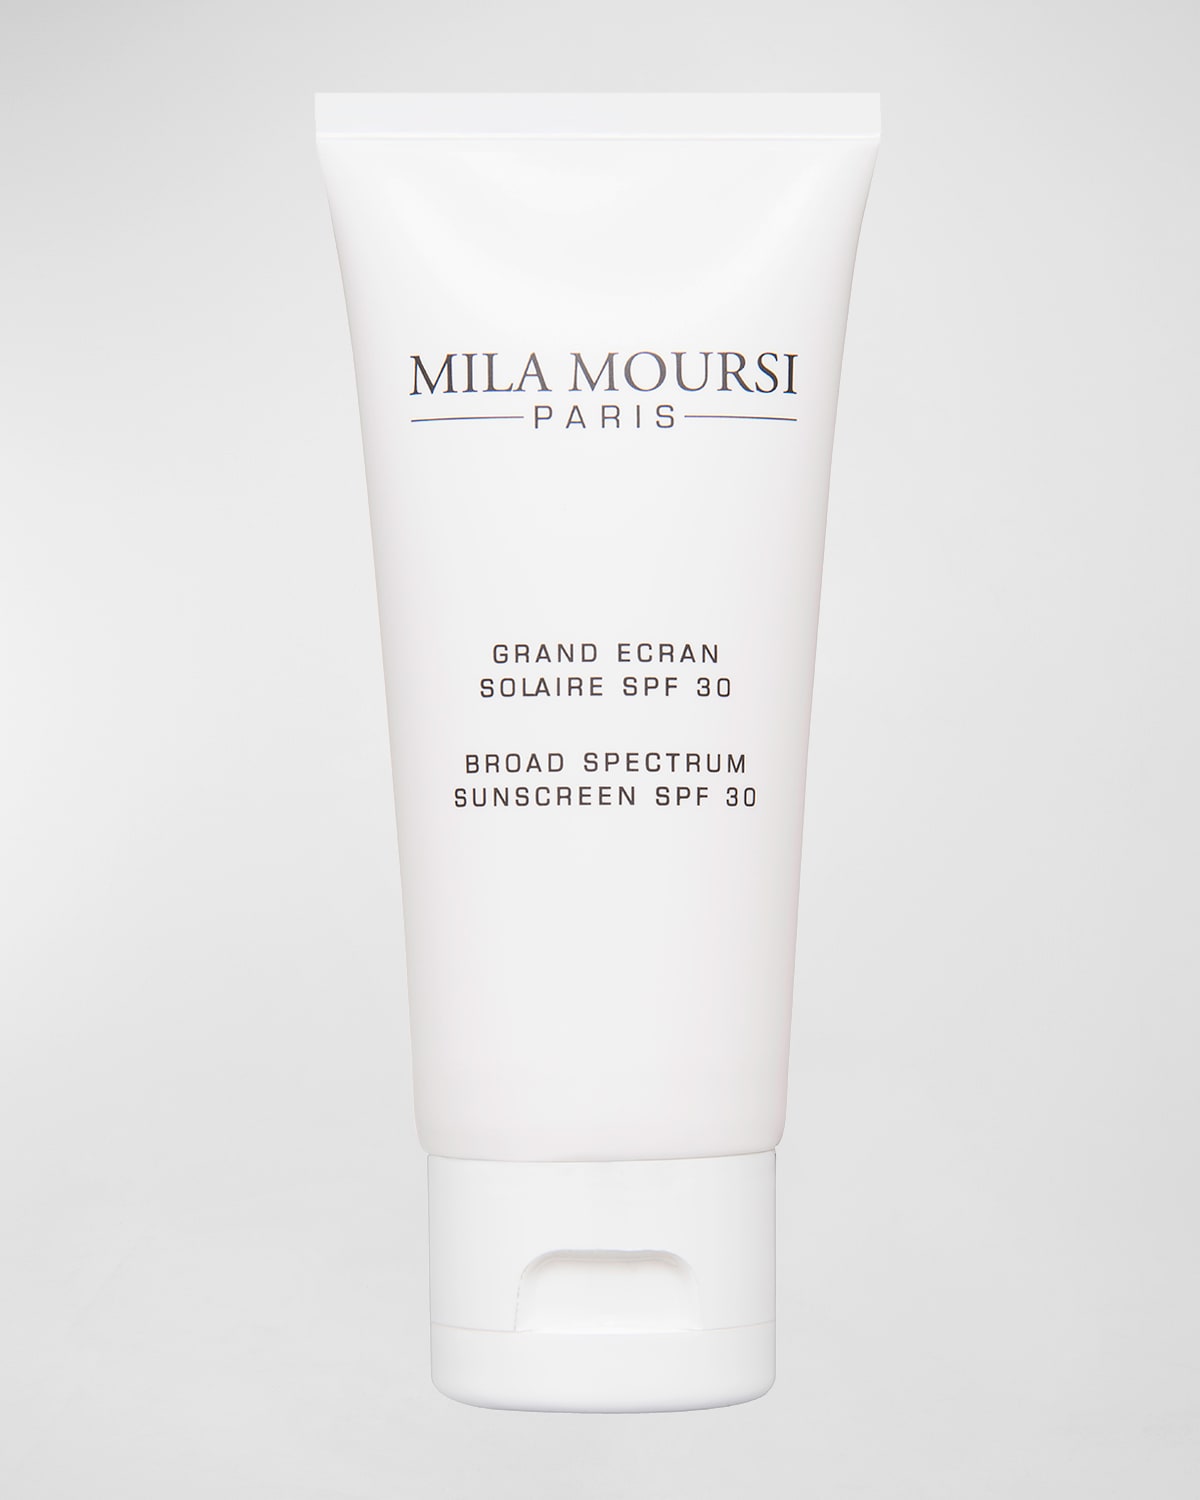 Mila Moursi Broad Spectrum Sunscreen SPF 30, 1.7 oz.